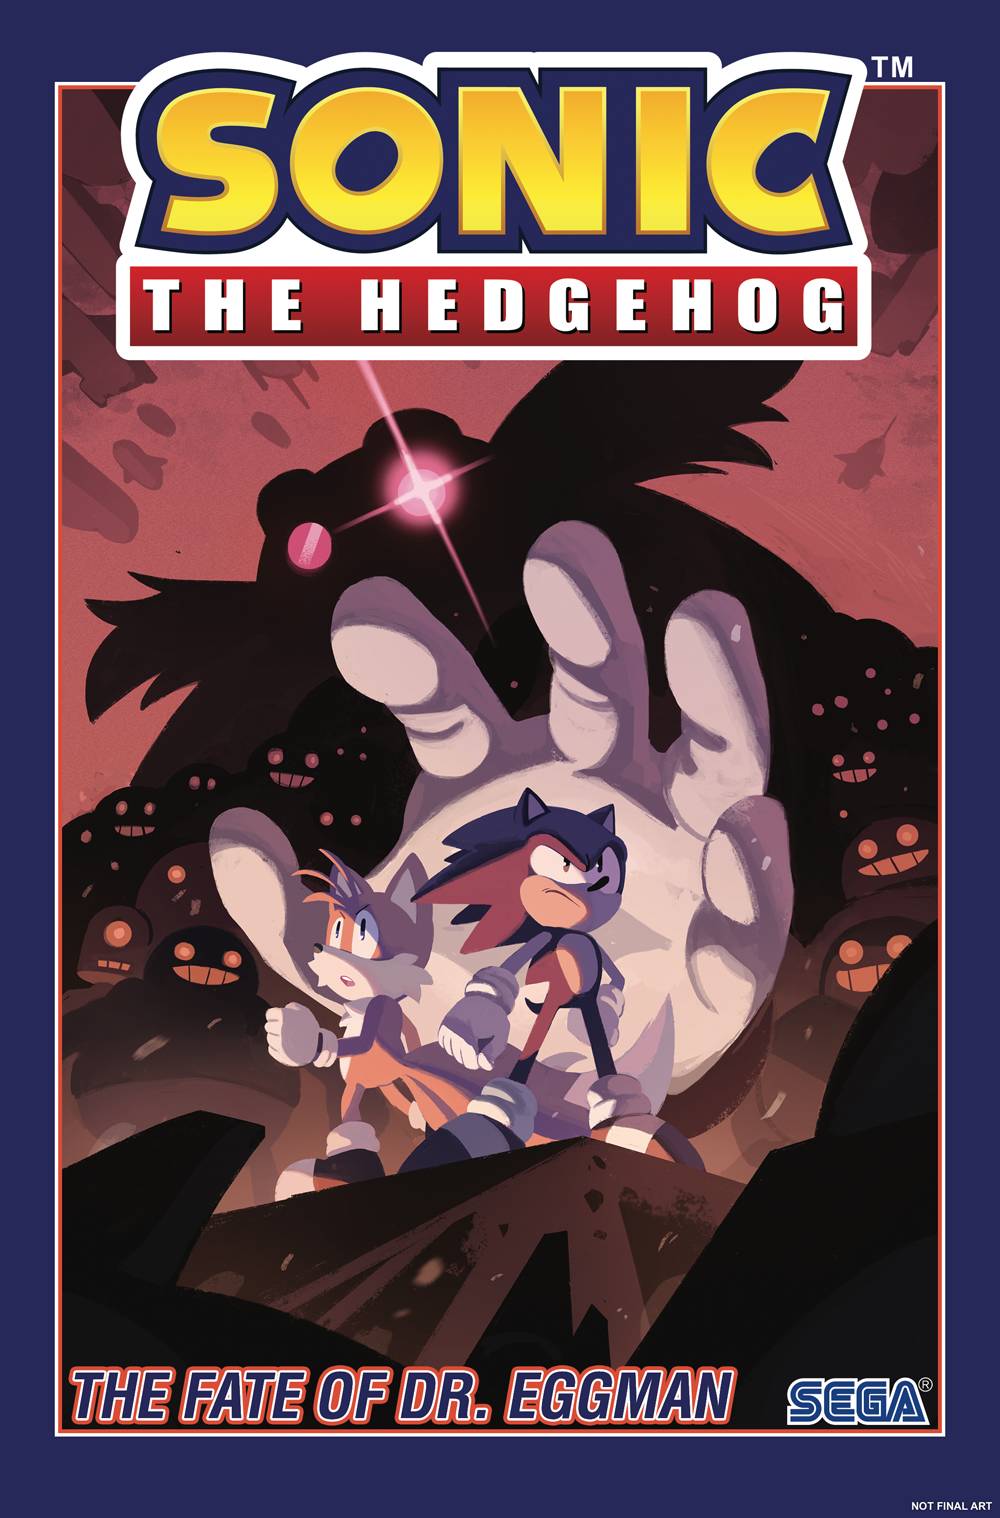 Sonic The Hedgehog Vol. 02 Fate of Dr. Eggman